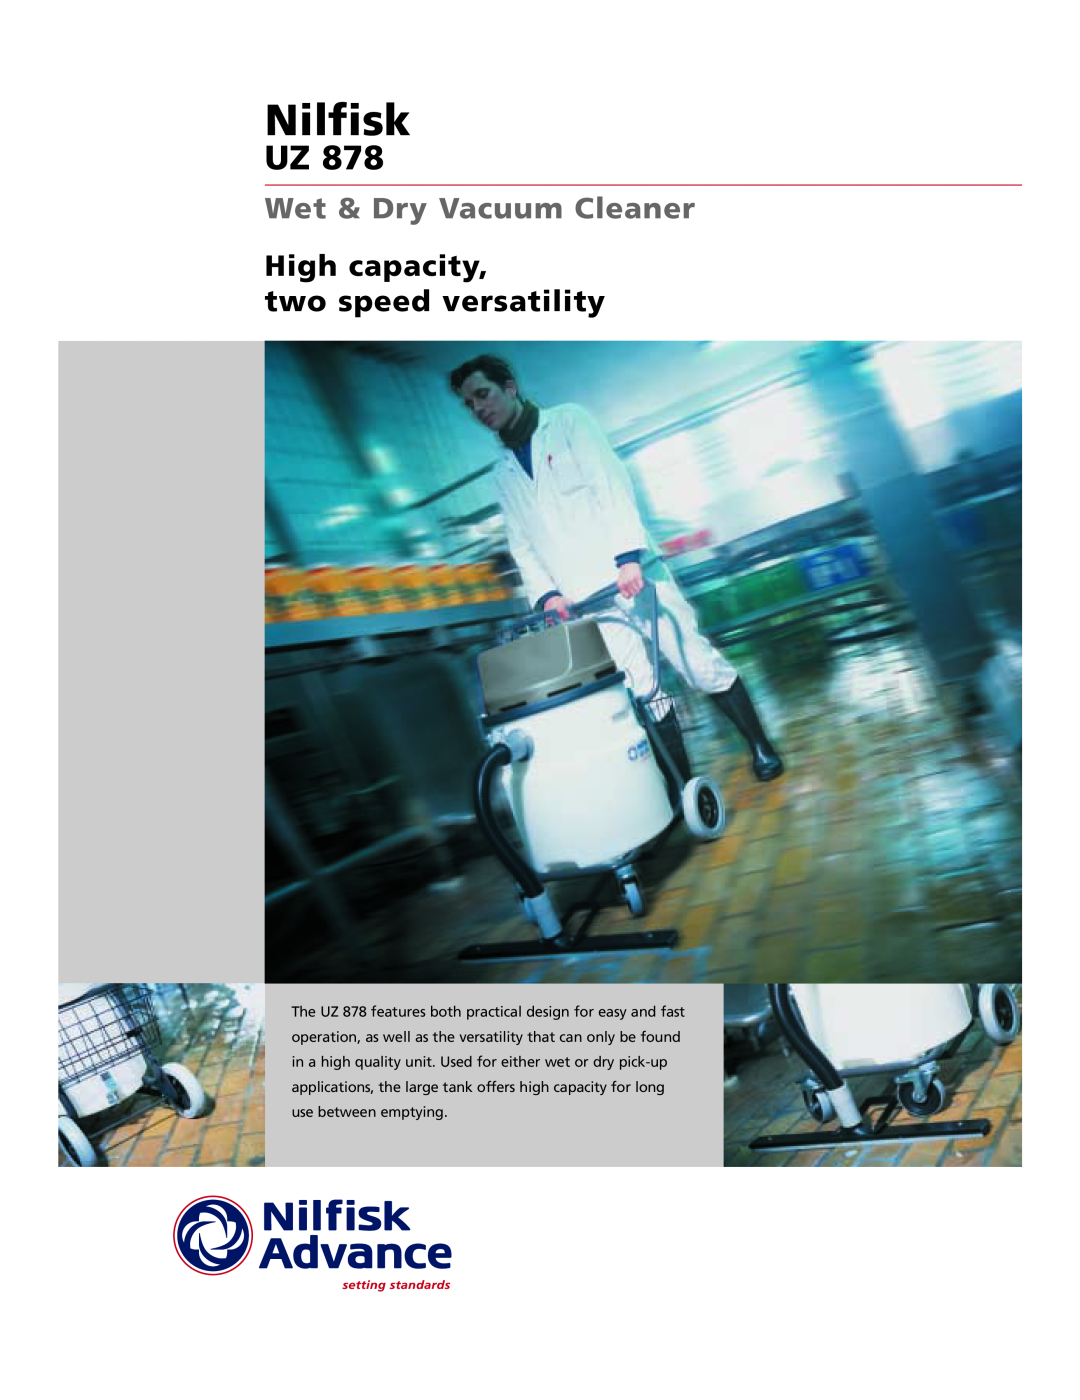 Nilfisk-Advance America Nilfisk UZ 878 manual Wet & Dry Vacuum Cleaner, High capacity two speed versatility 